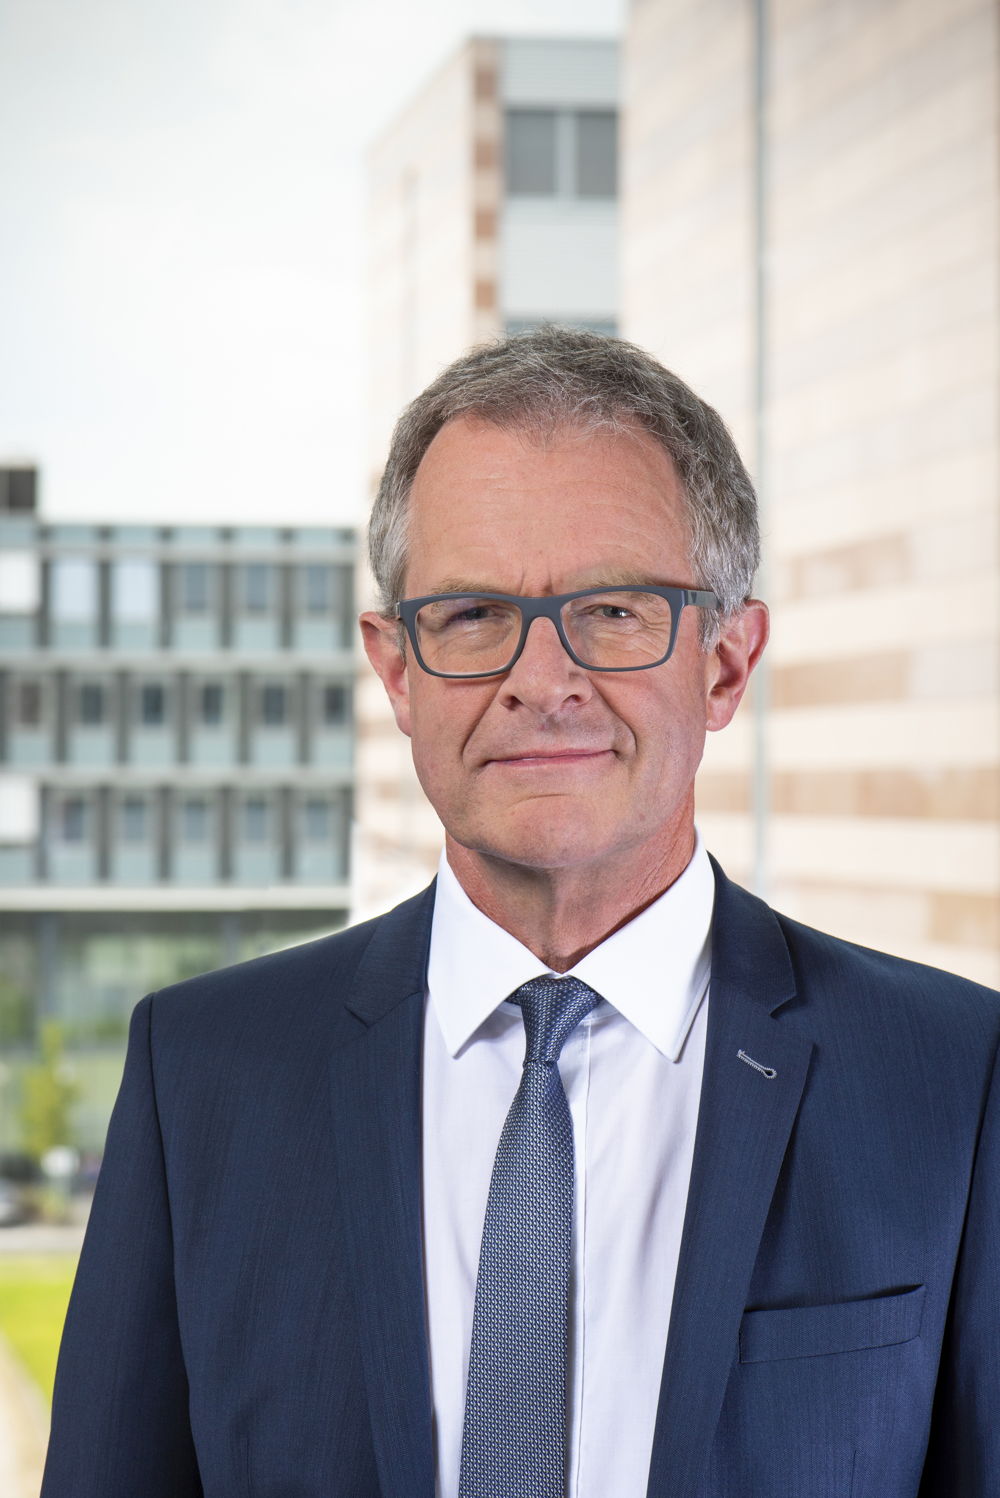 Jurgen Steinmeyer, Responsable Péage chez DKV Euro Service